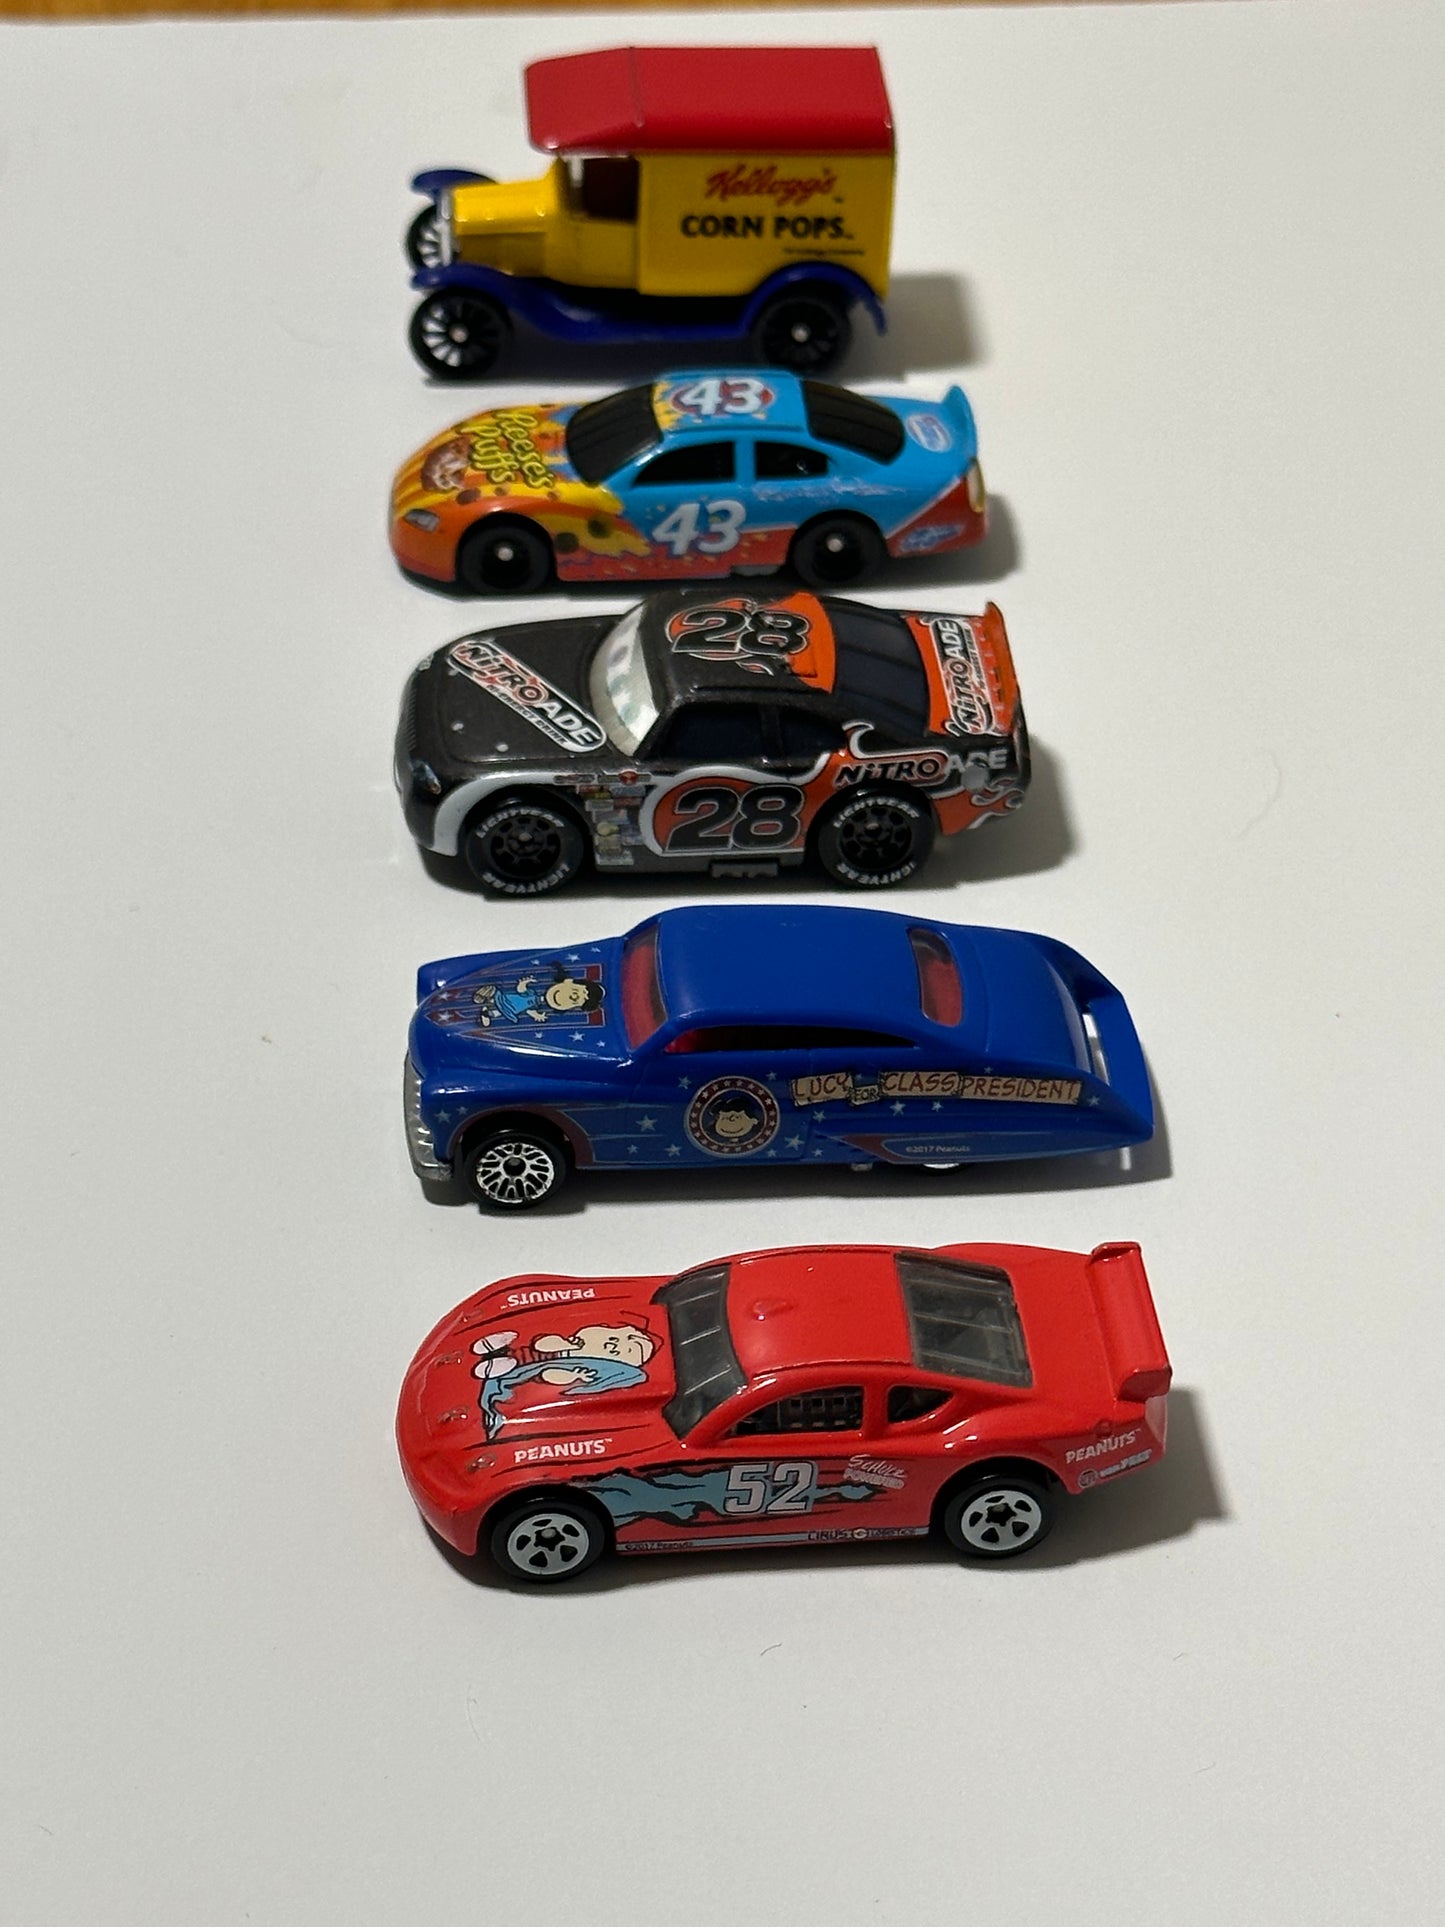 5 Hot Wheels Cars - Peanuts, Disney Cars, Cereal - EUC